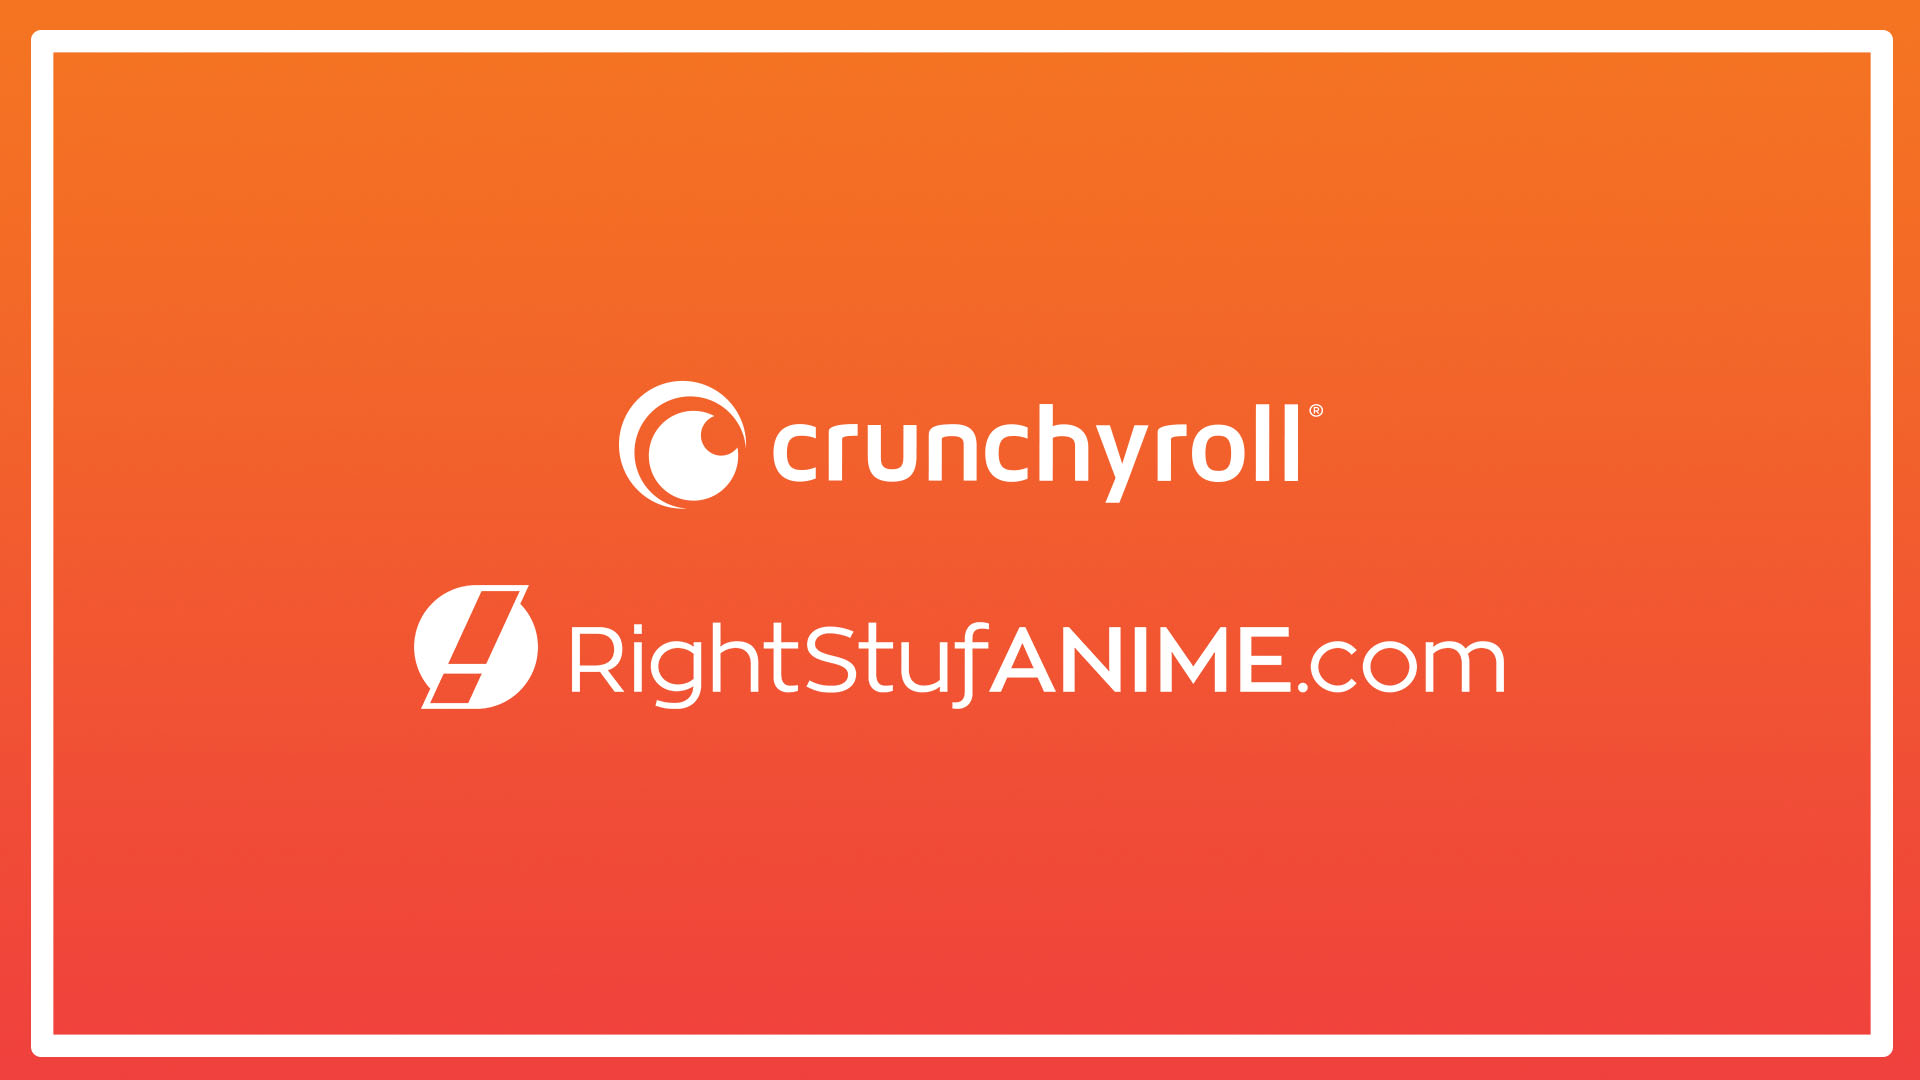 Crunchyroll and RightStufAnime.com